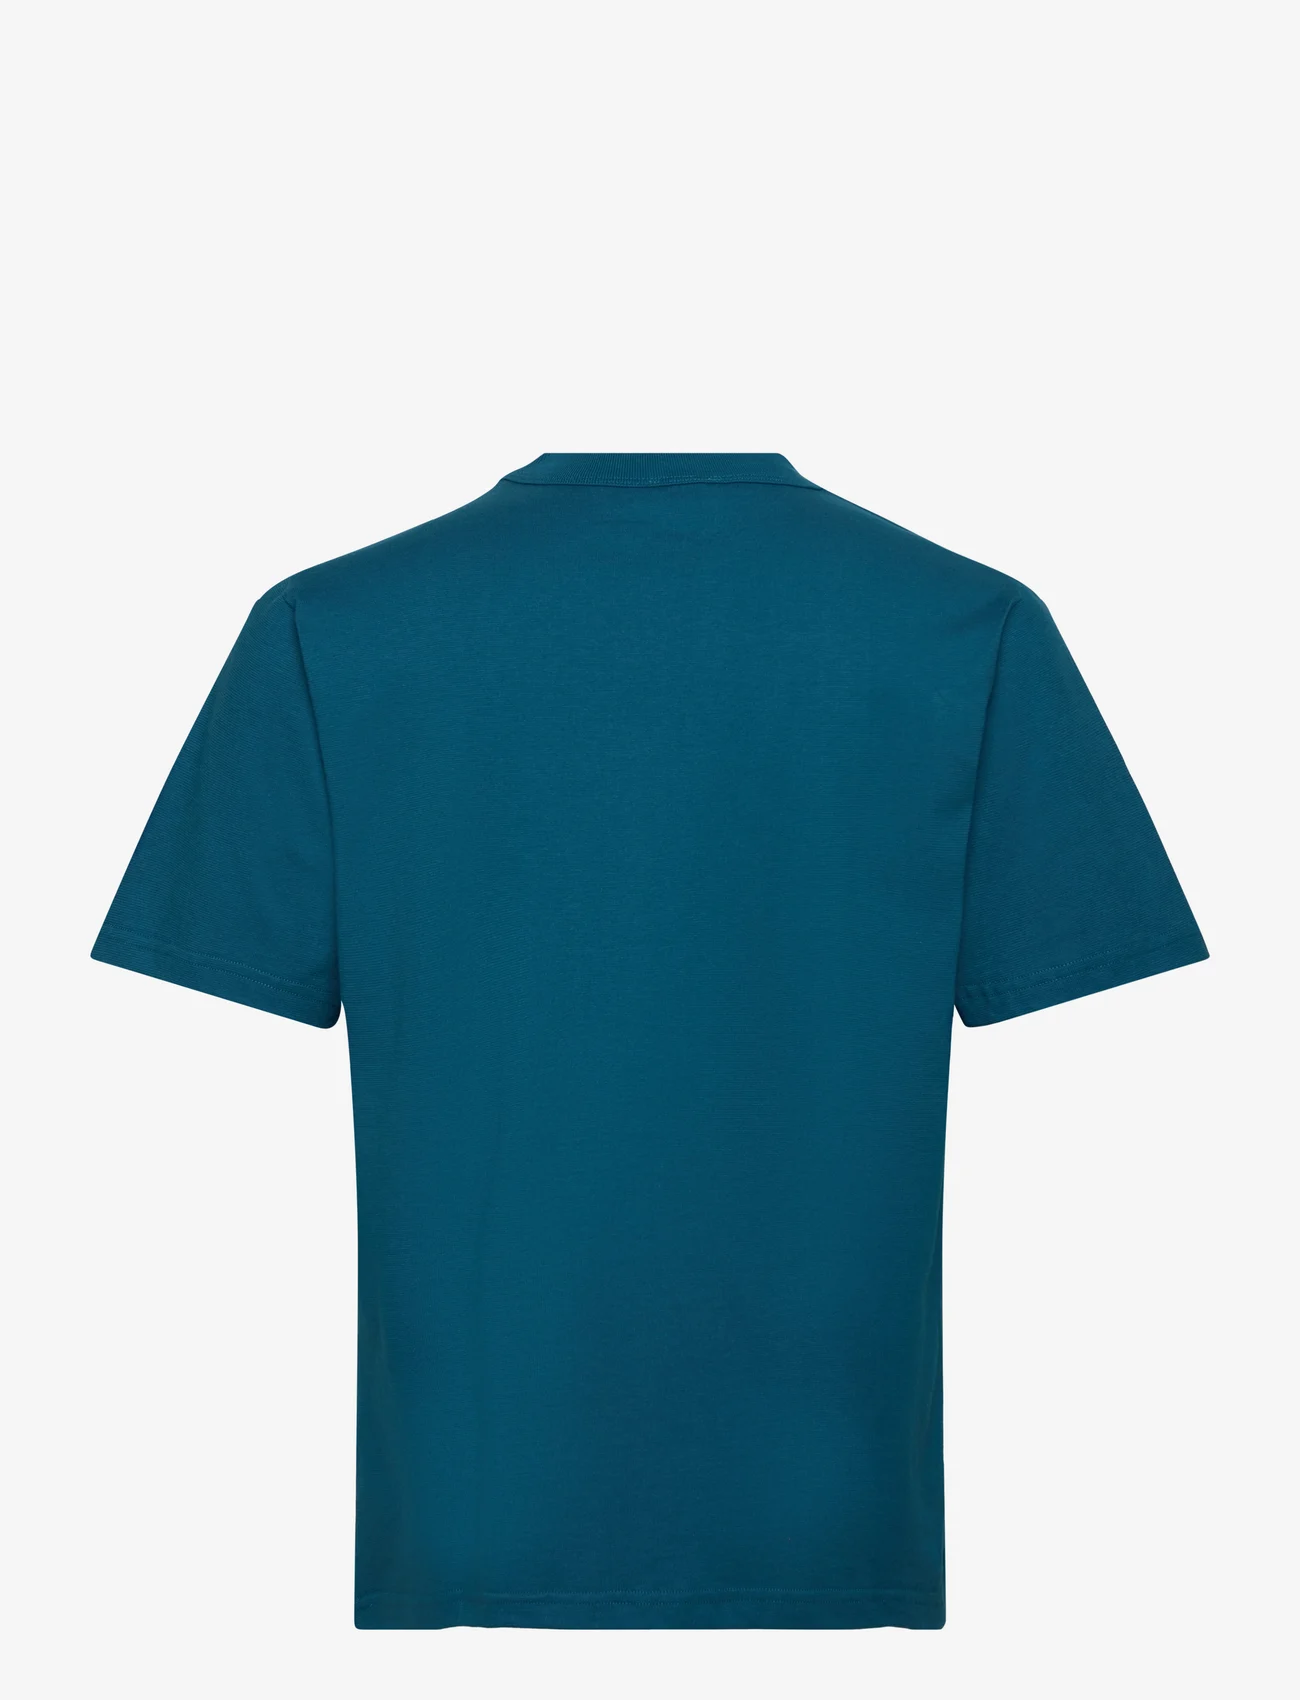 Armor Lux - Basic T-shirt "Callac" Héritage - bleu glacial - 1